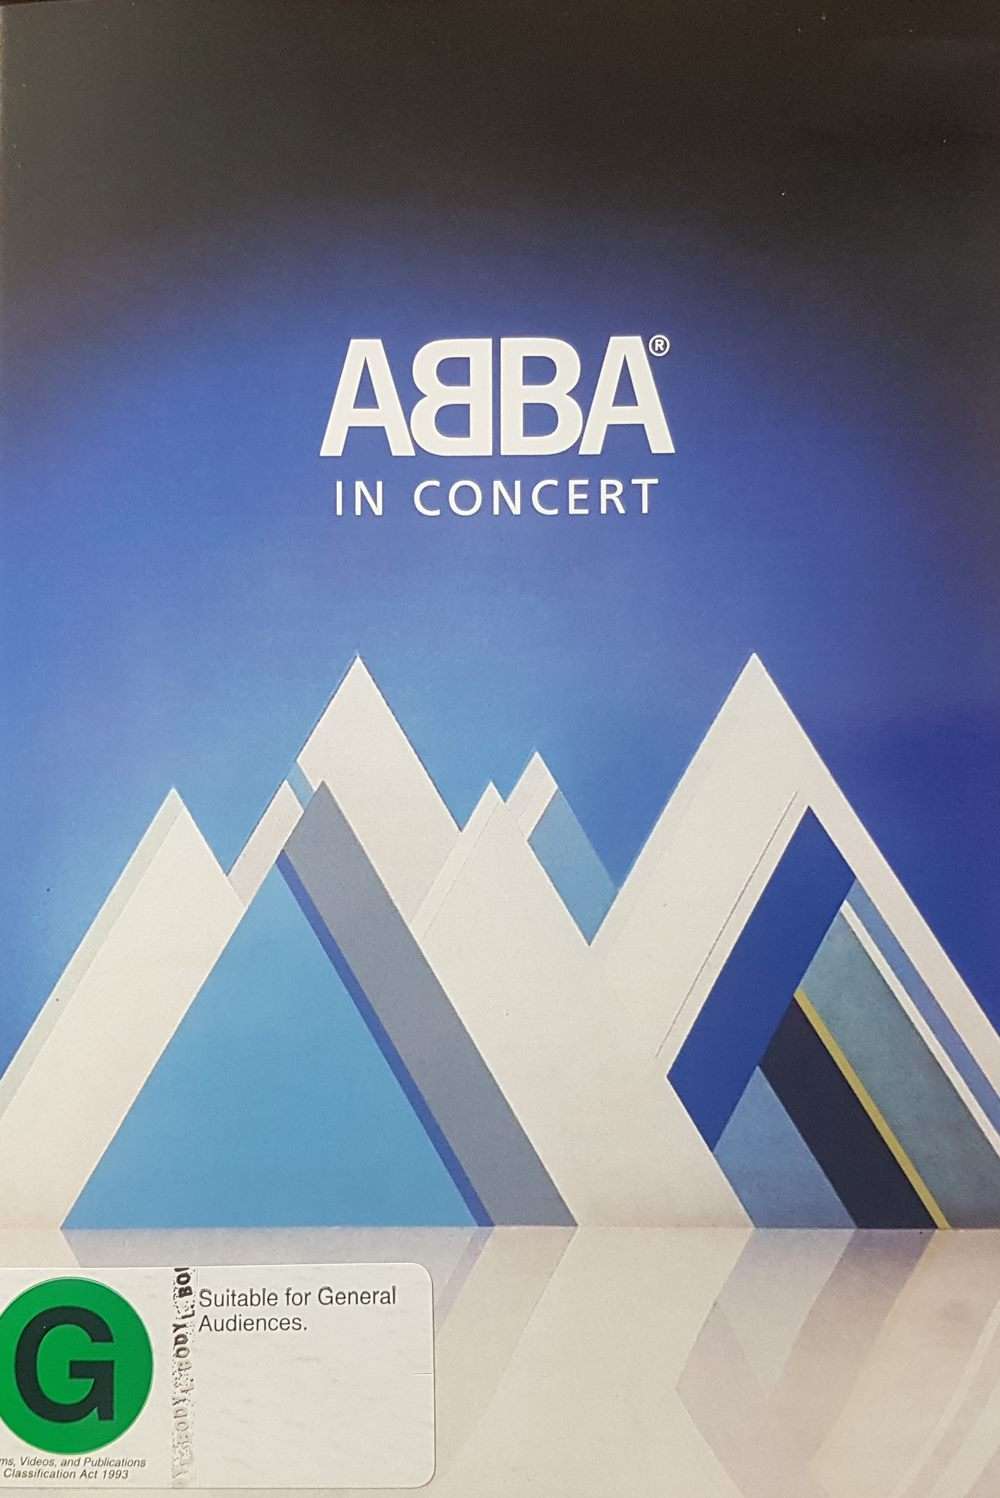 ABBA in Concert - 30th Anniversary